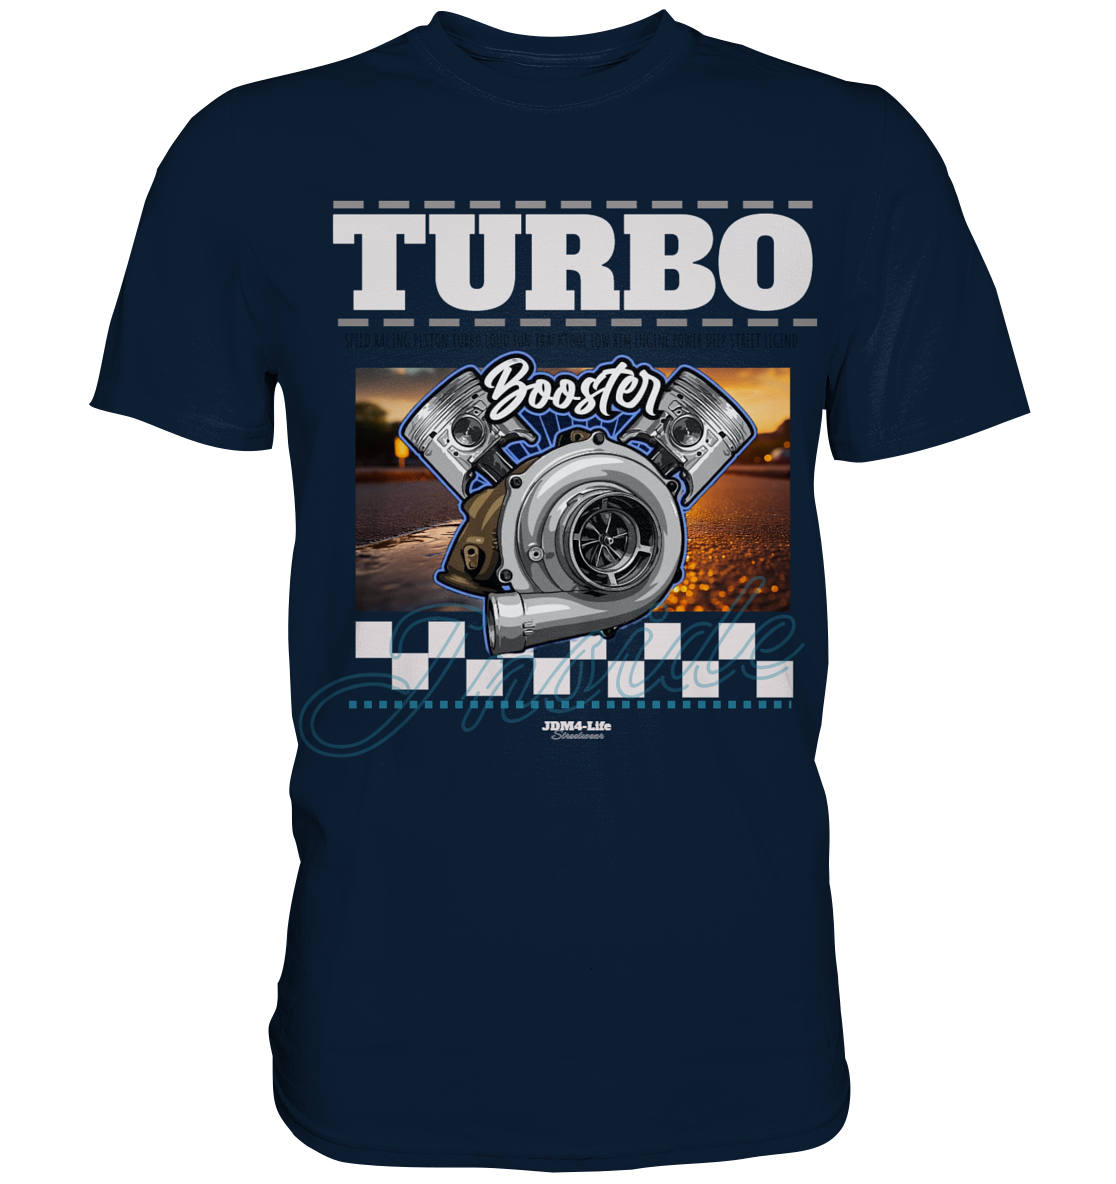 Turbo Booster  - Premium Shirt